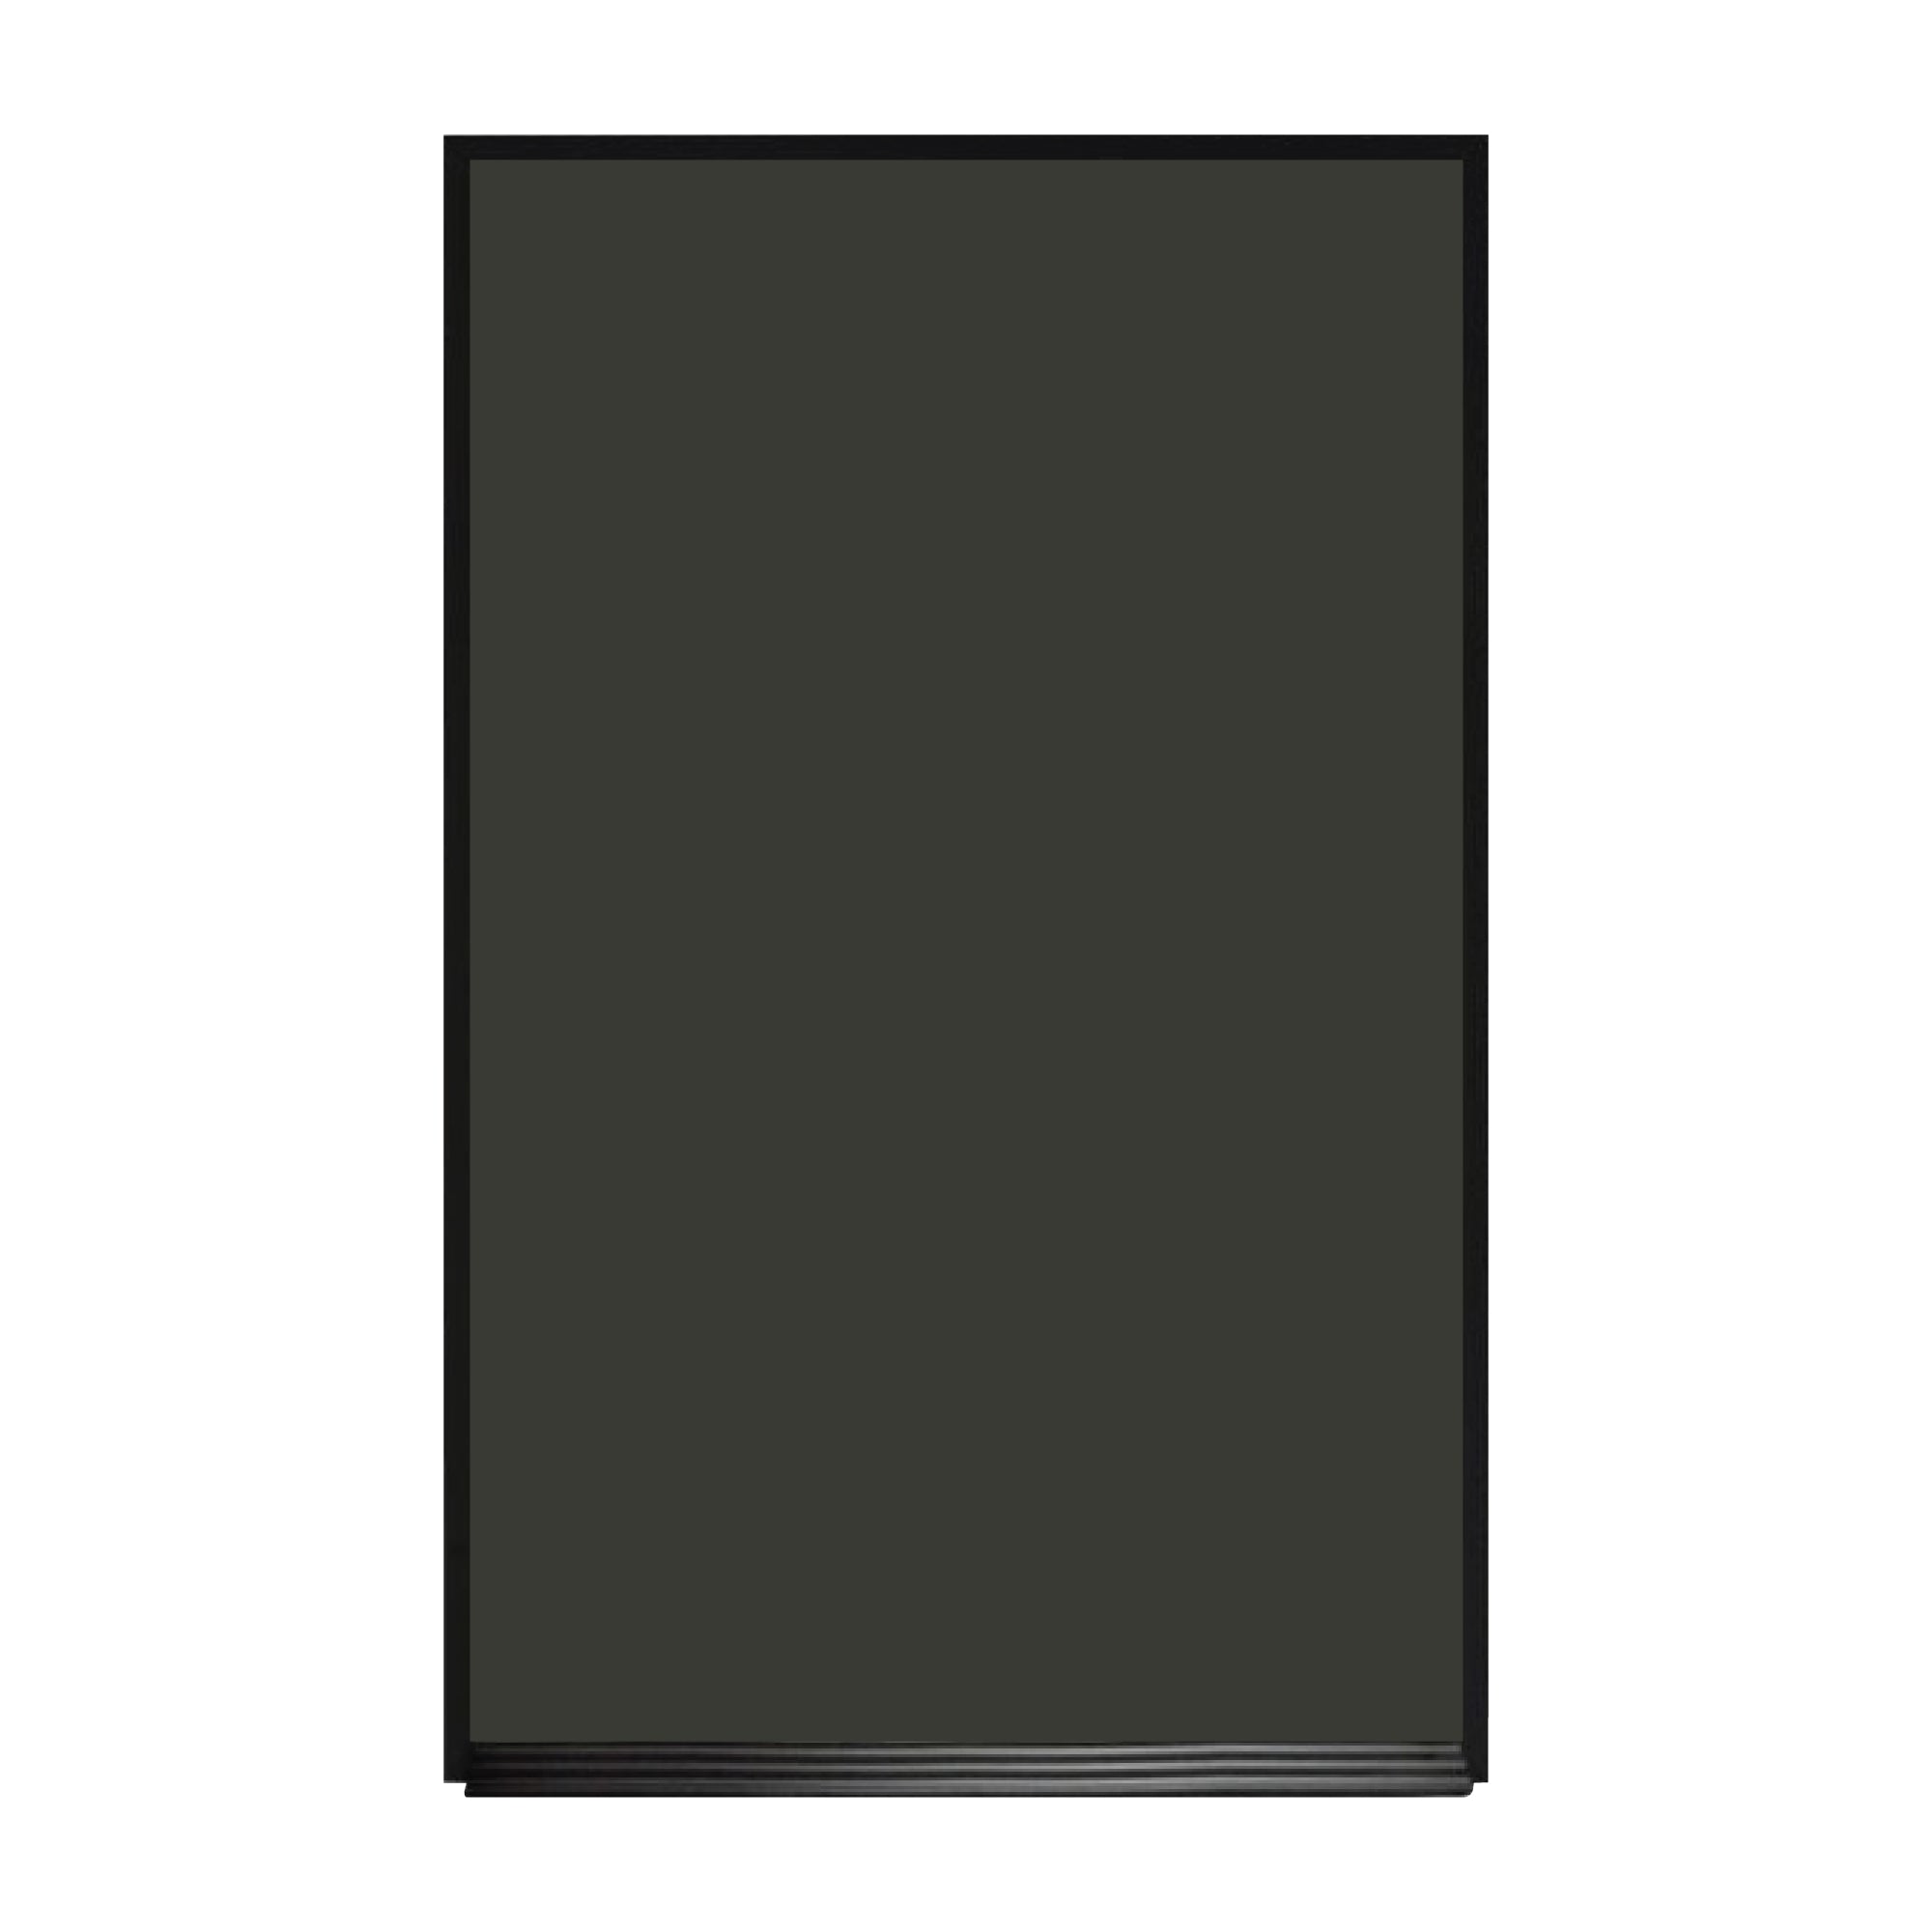 Ebony Aluminum Frame | Portrait Black Lam-Rite Chalkboard